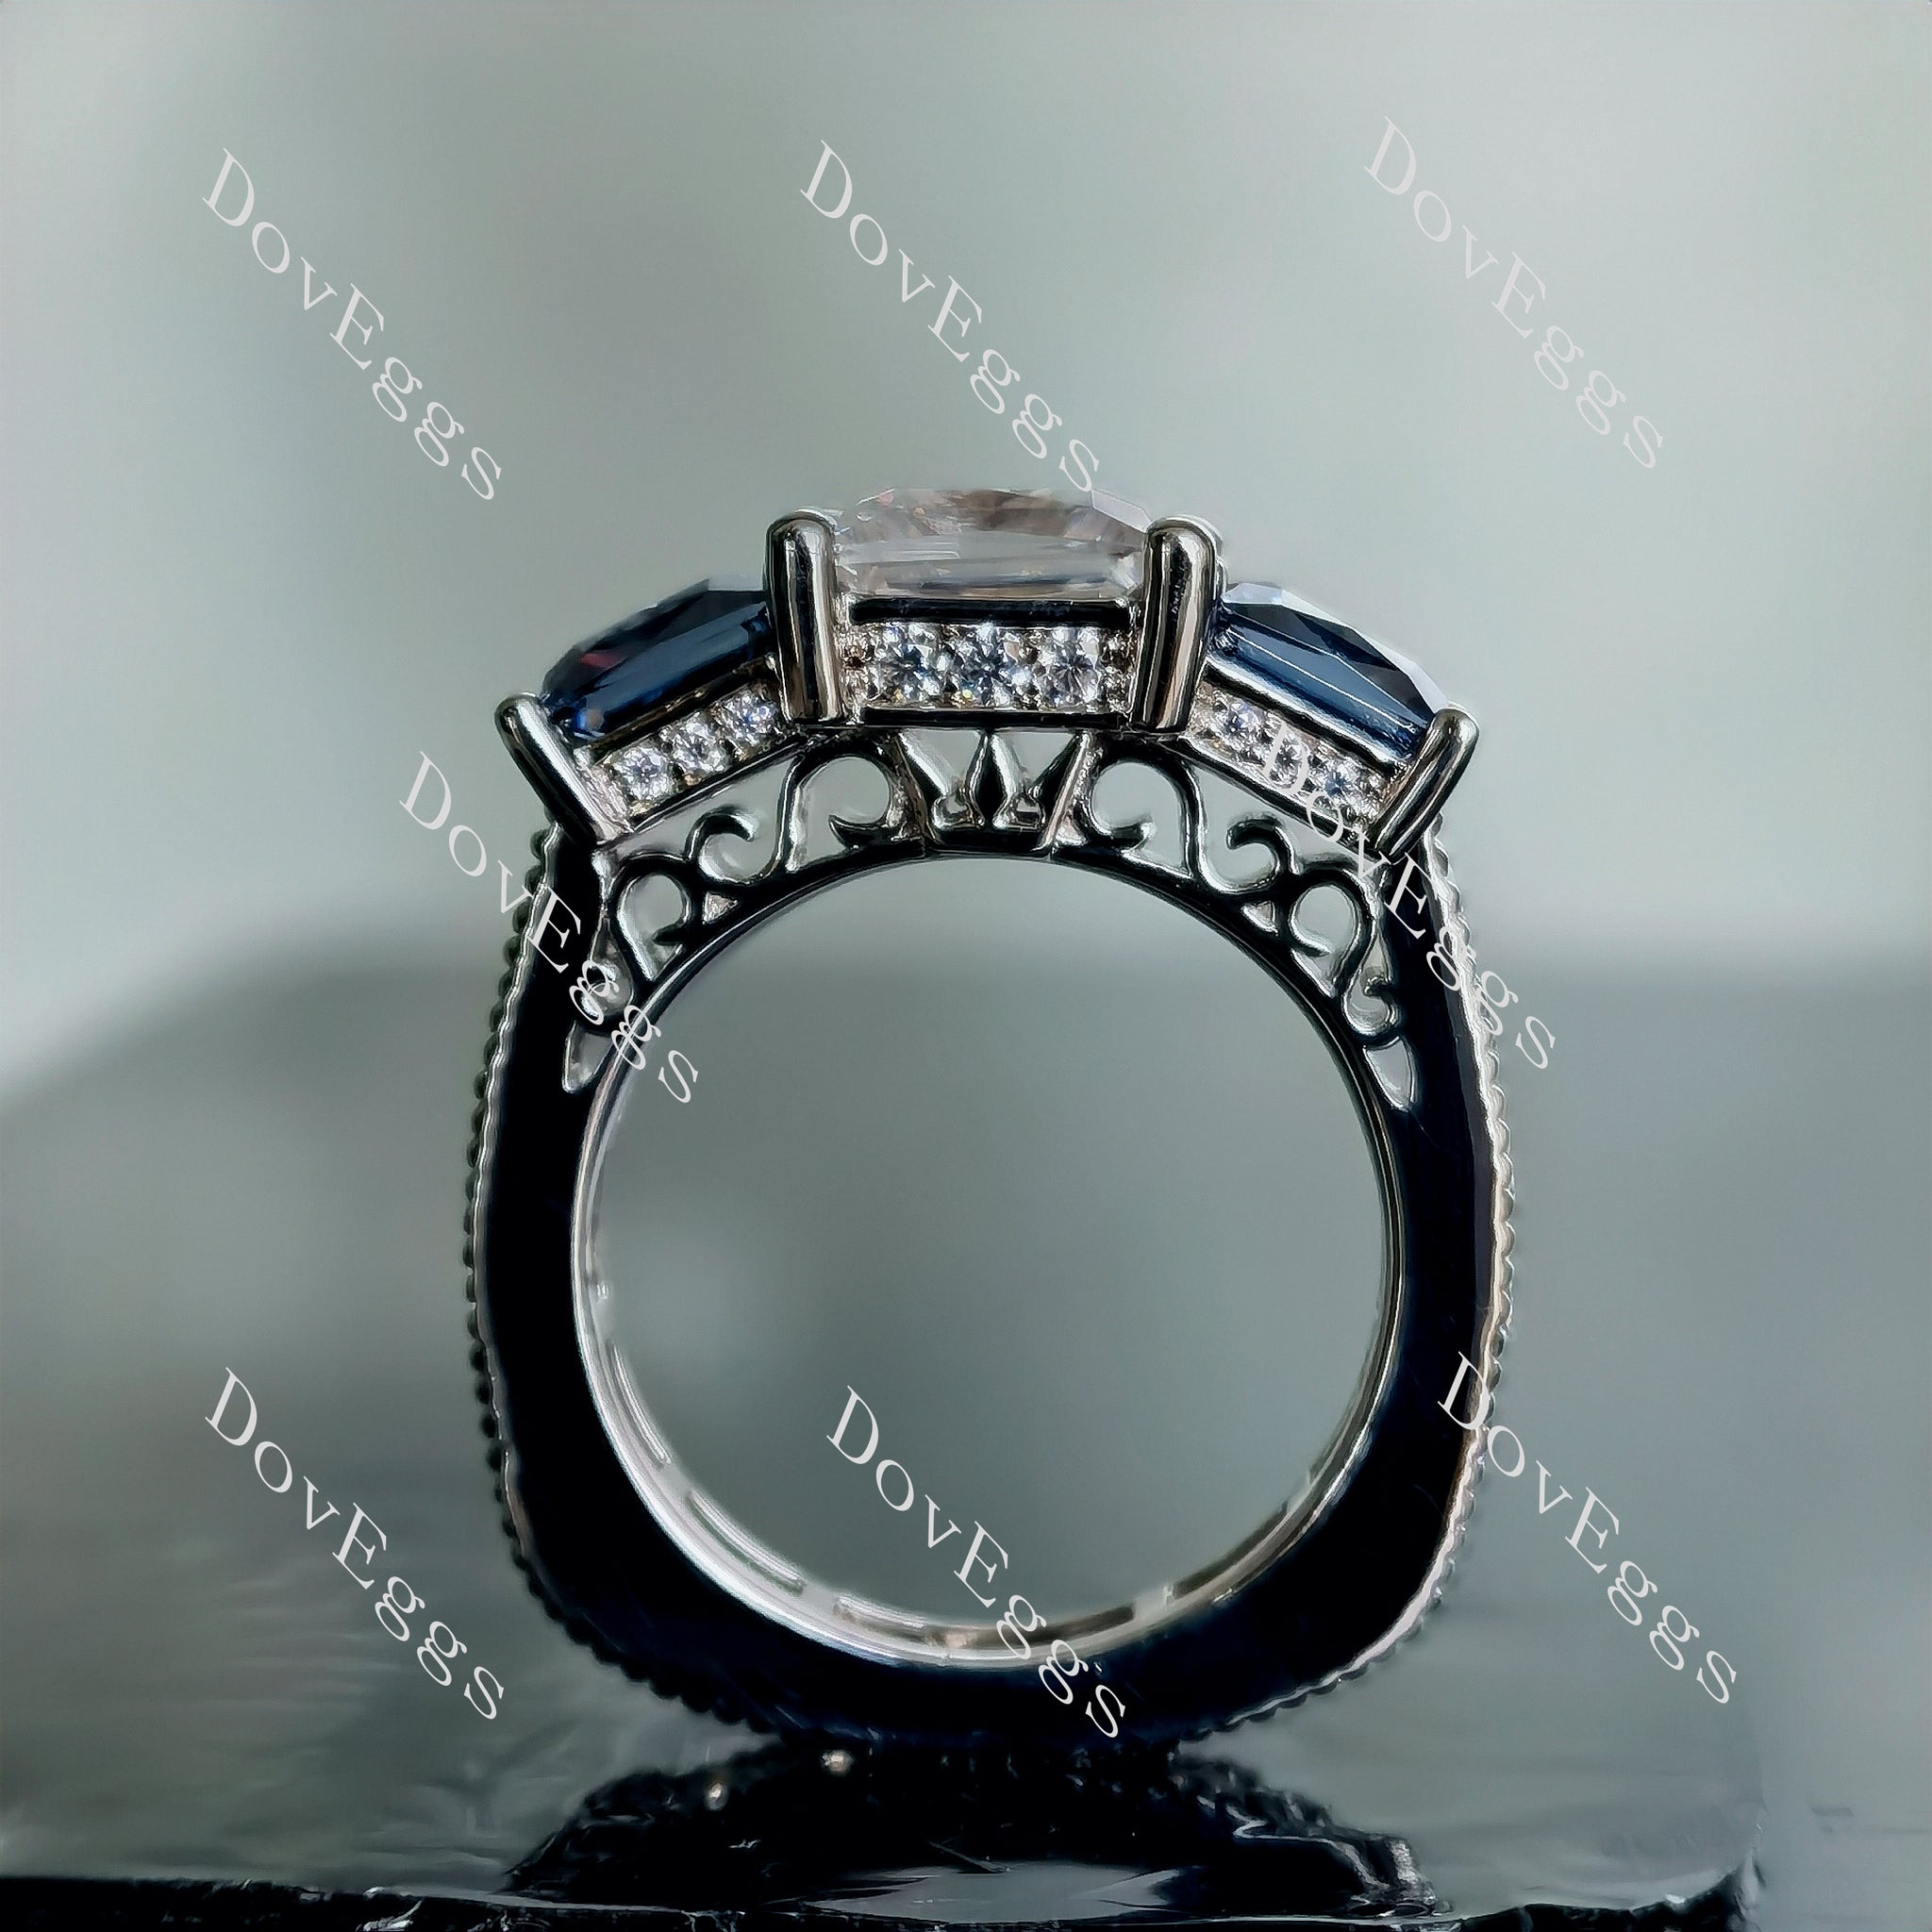 Doveggs princess three-stone channel set moissanite engagement ring